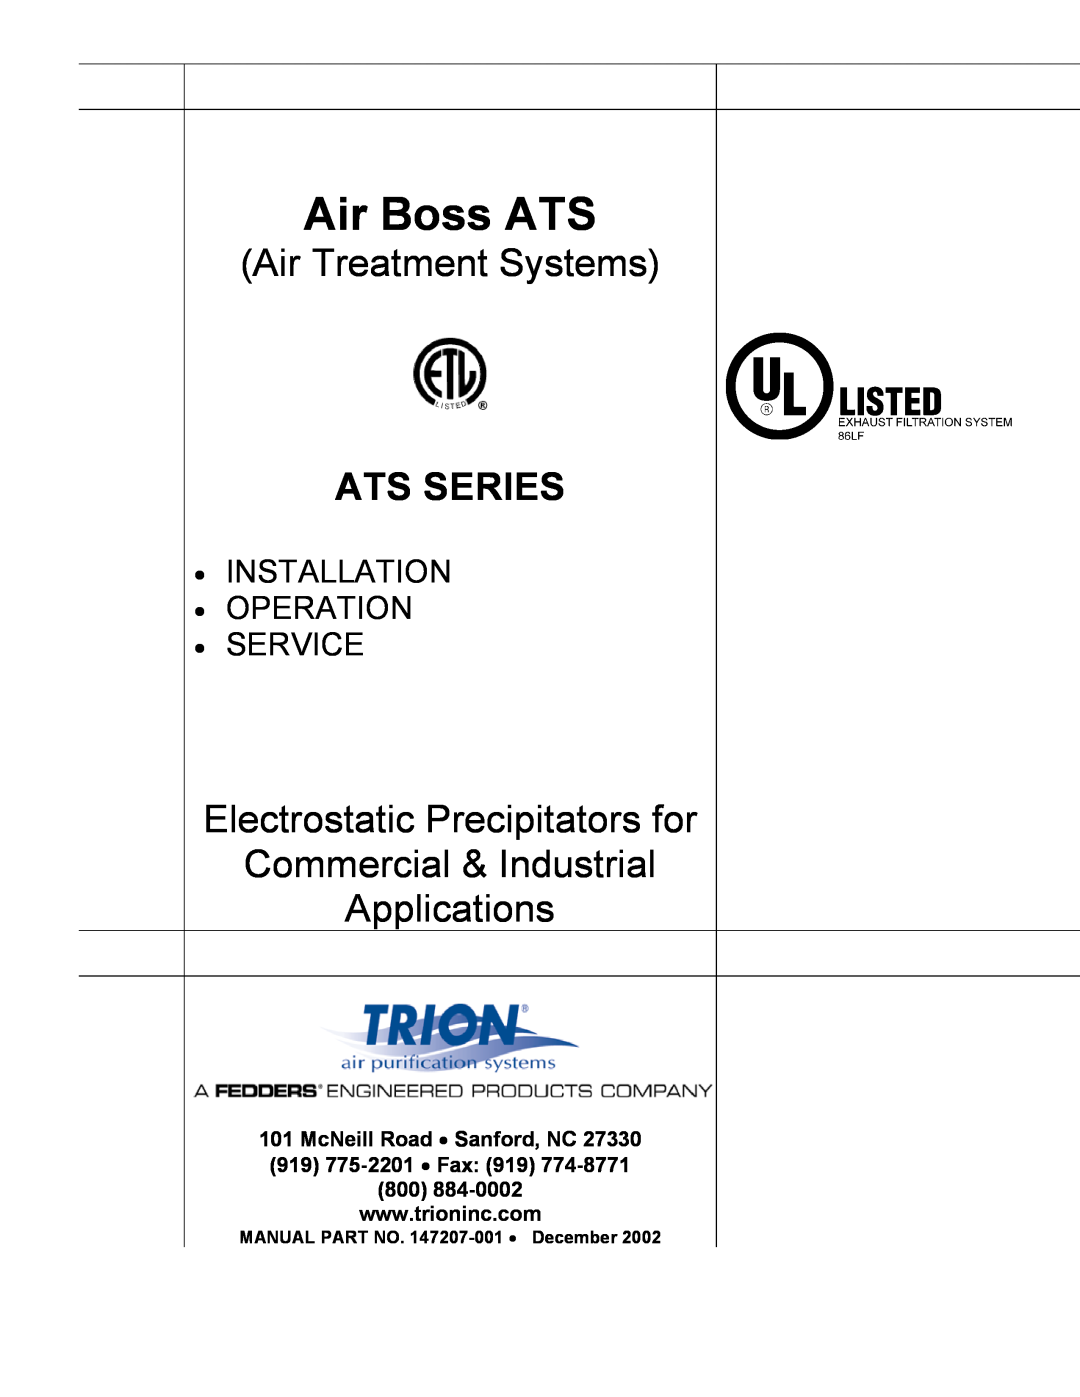 Trion 147207-001 manual McNeill Road Sanford, NC, 919775-2201 Fax, Air Boss ATS, Air Treatment Systems, Ats Series 